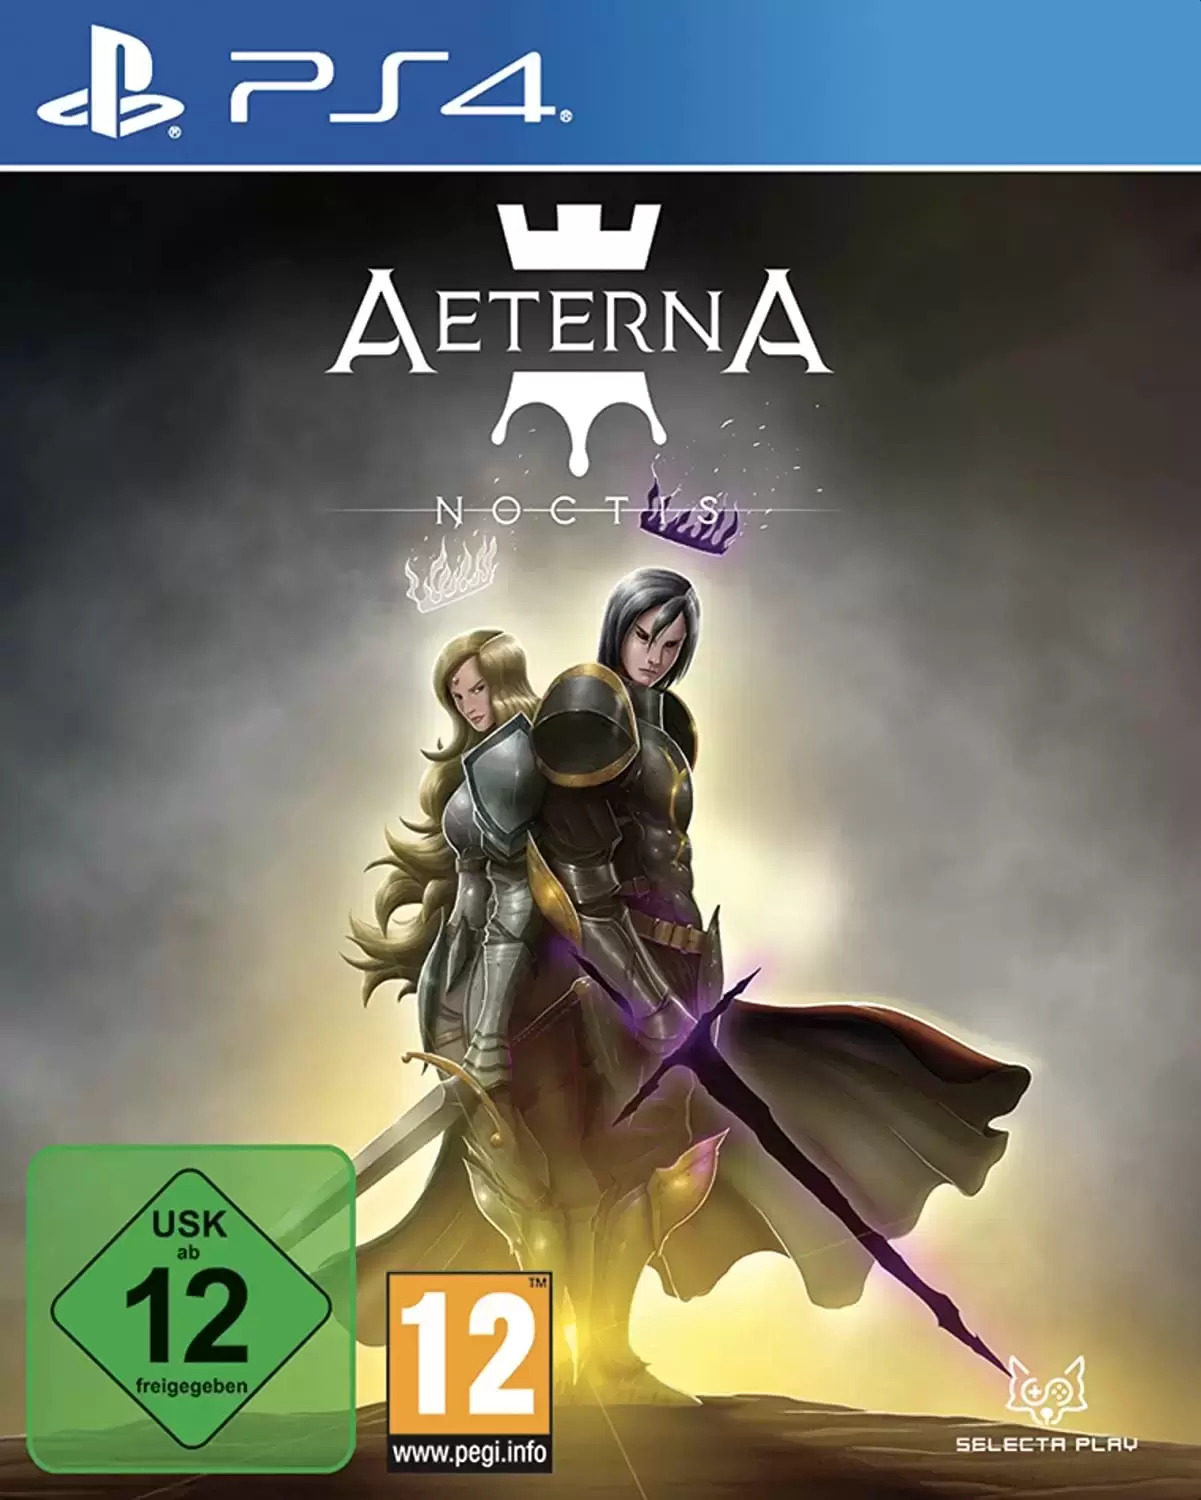 PS4 Games - Aeterna Noctis